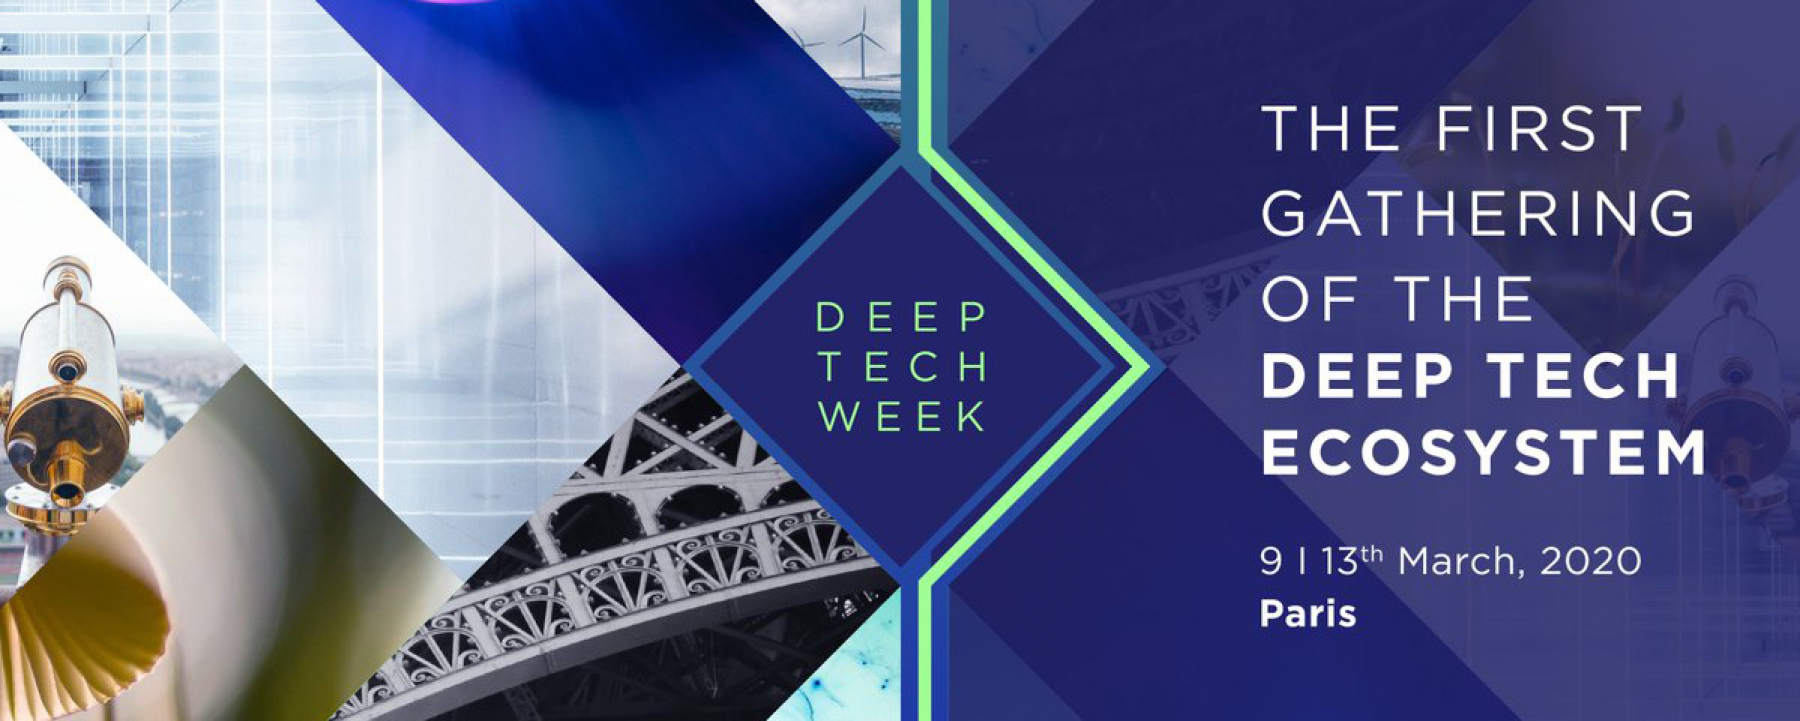 Événement Deep Tech Week organisé par la BPI France